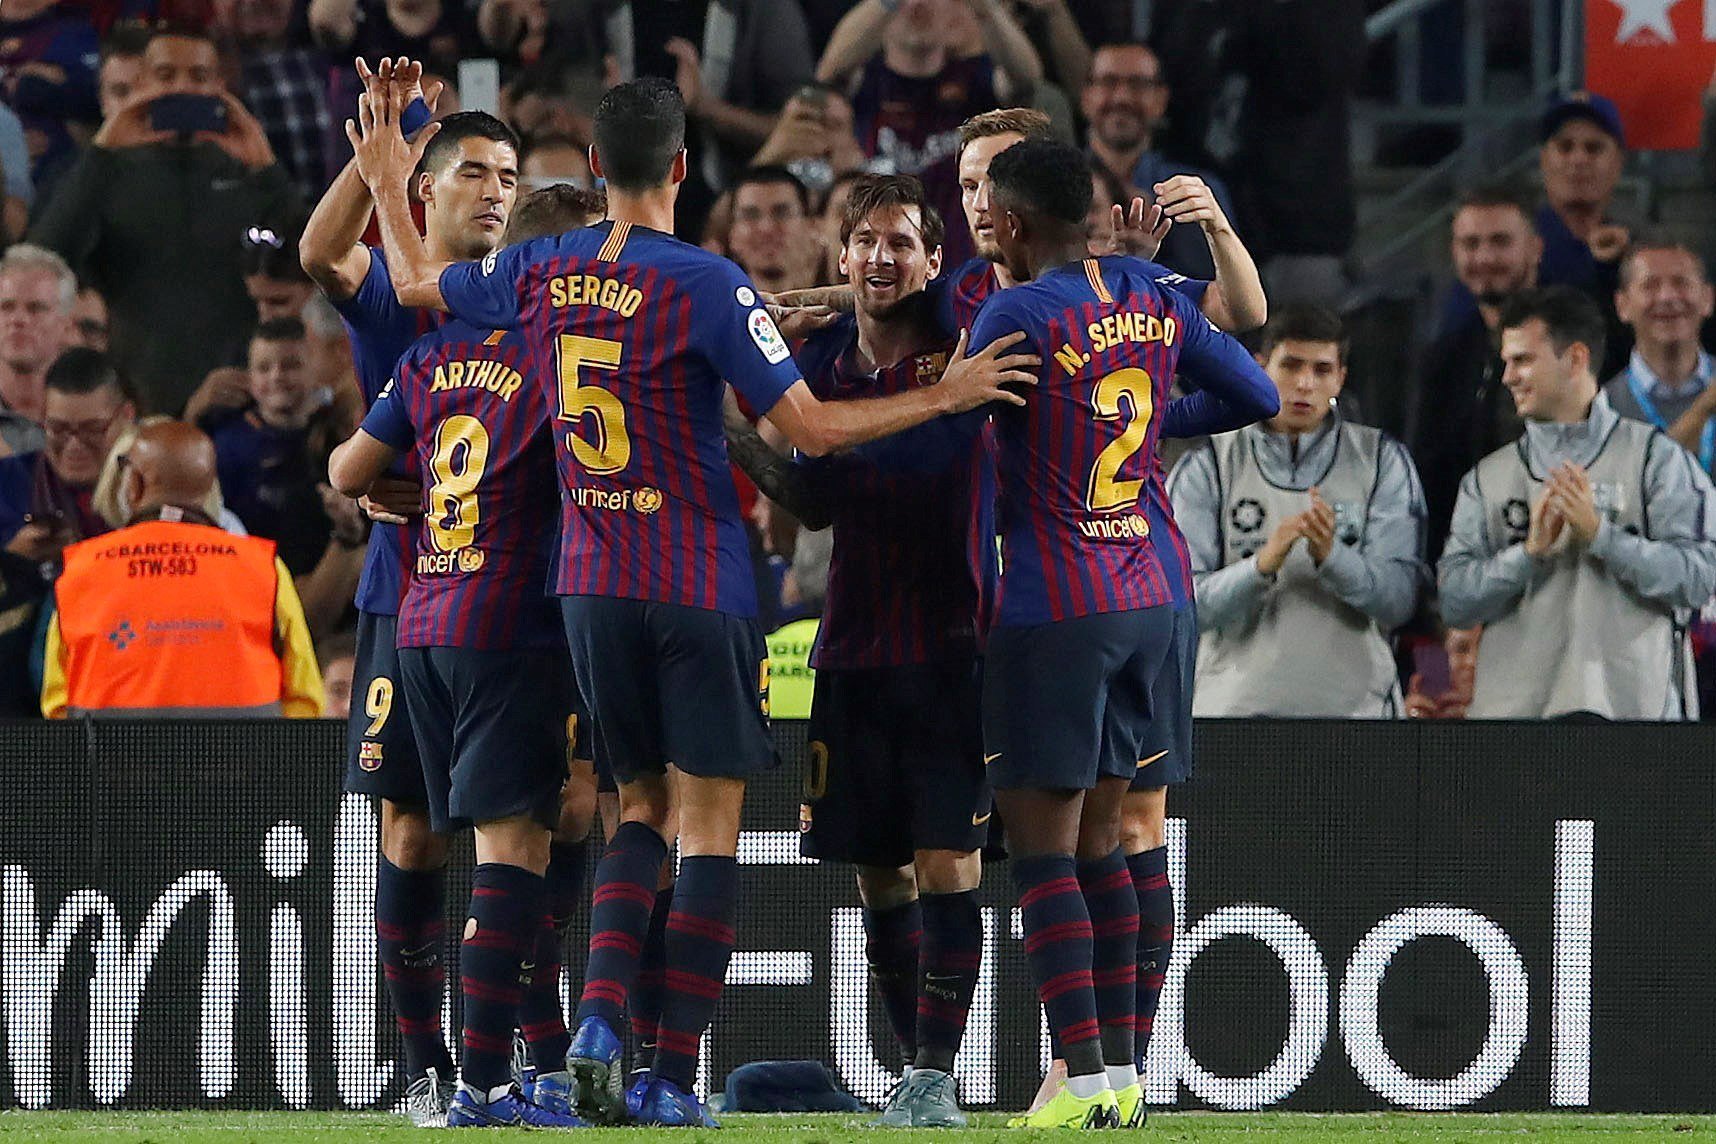 El Barça recupera el liderato en plena pesadilla (4-2)